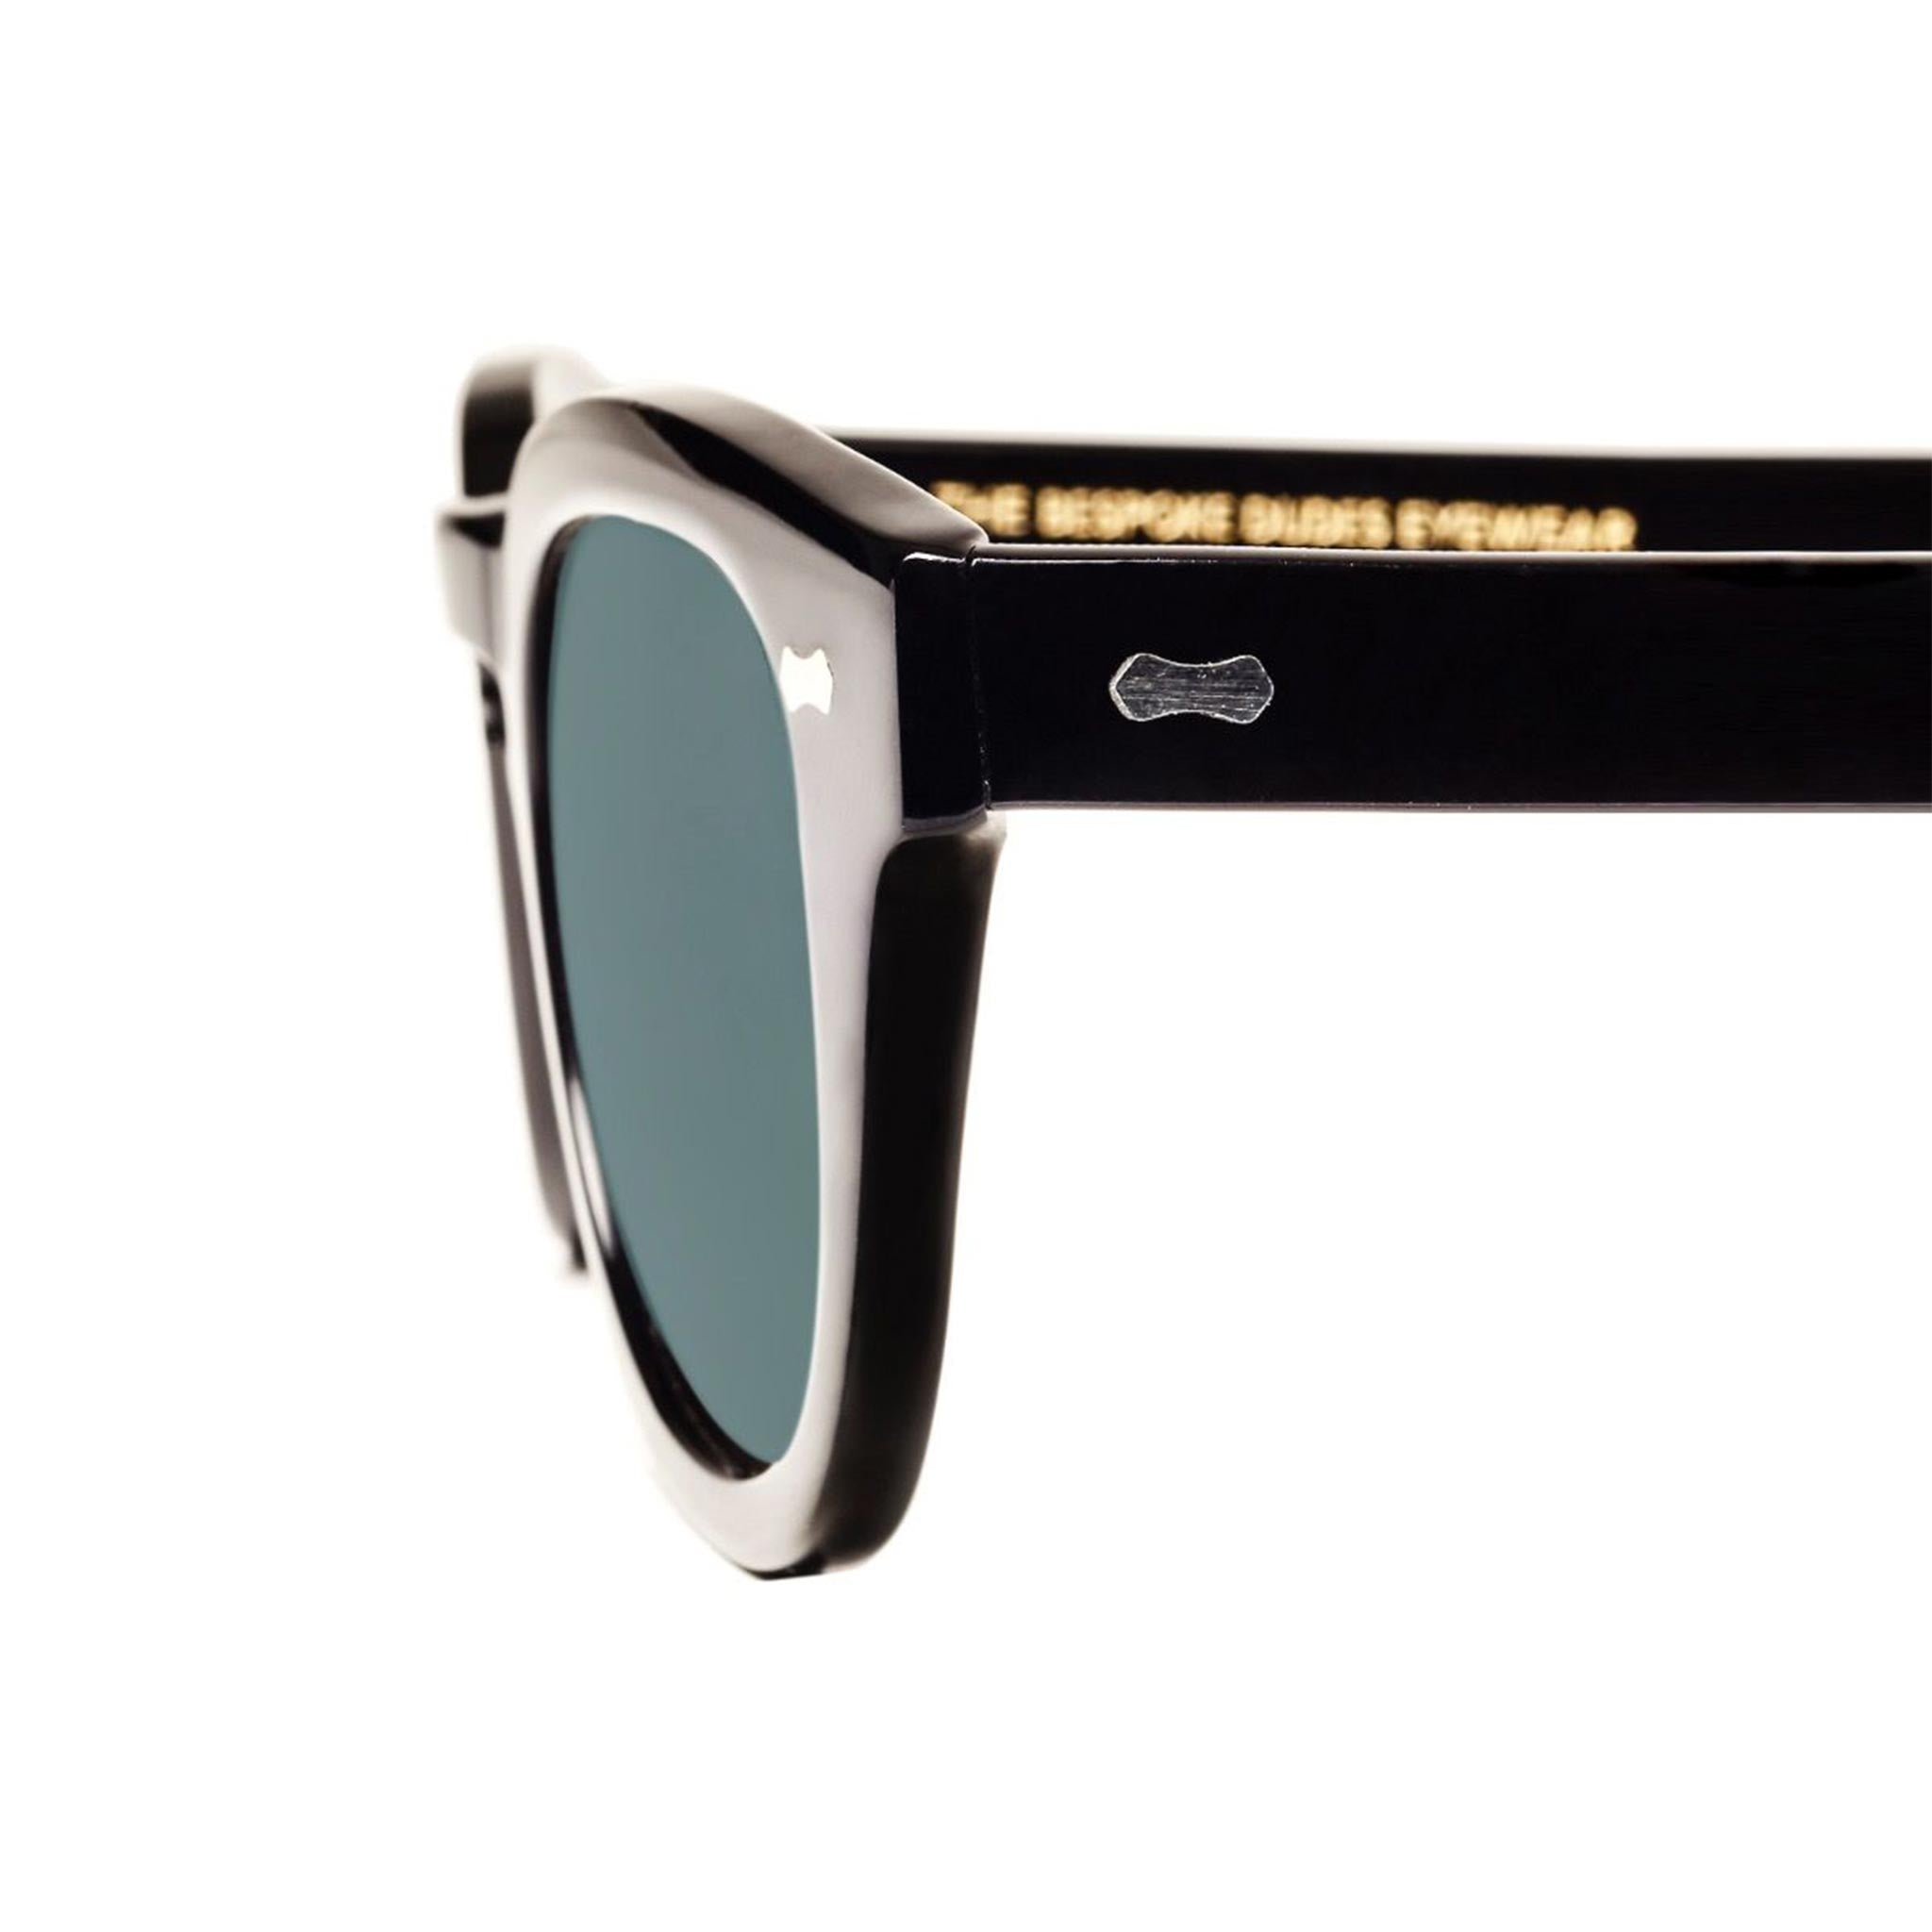 Donegal Sunglasses in Black